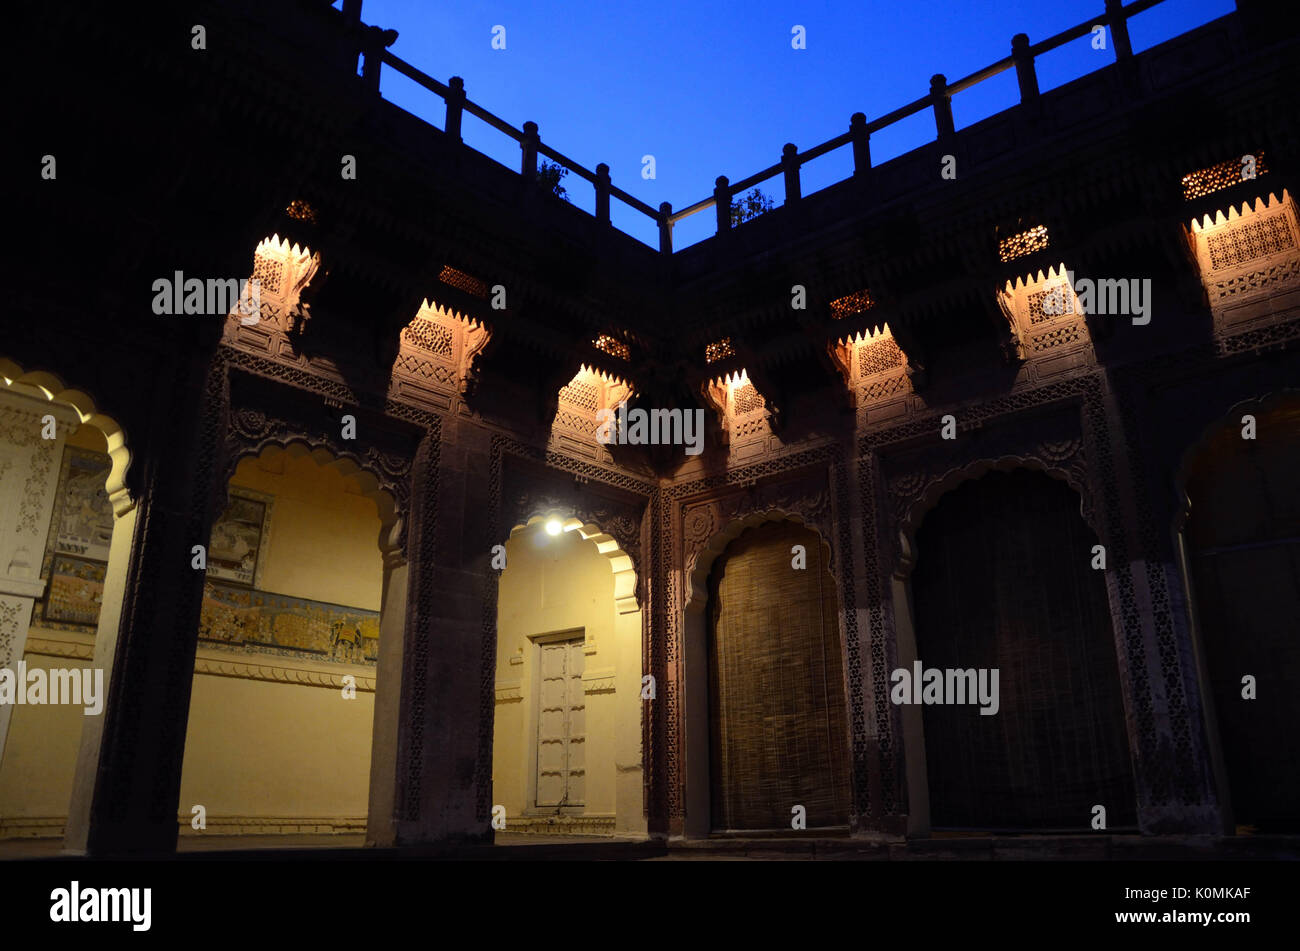 Beleuchteten Korridor im Innern Mehrangarh Fort Jodhpur, Rajasthan Indien Asien Stockfoto